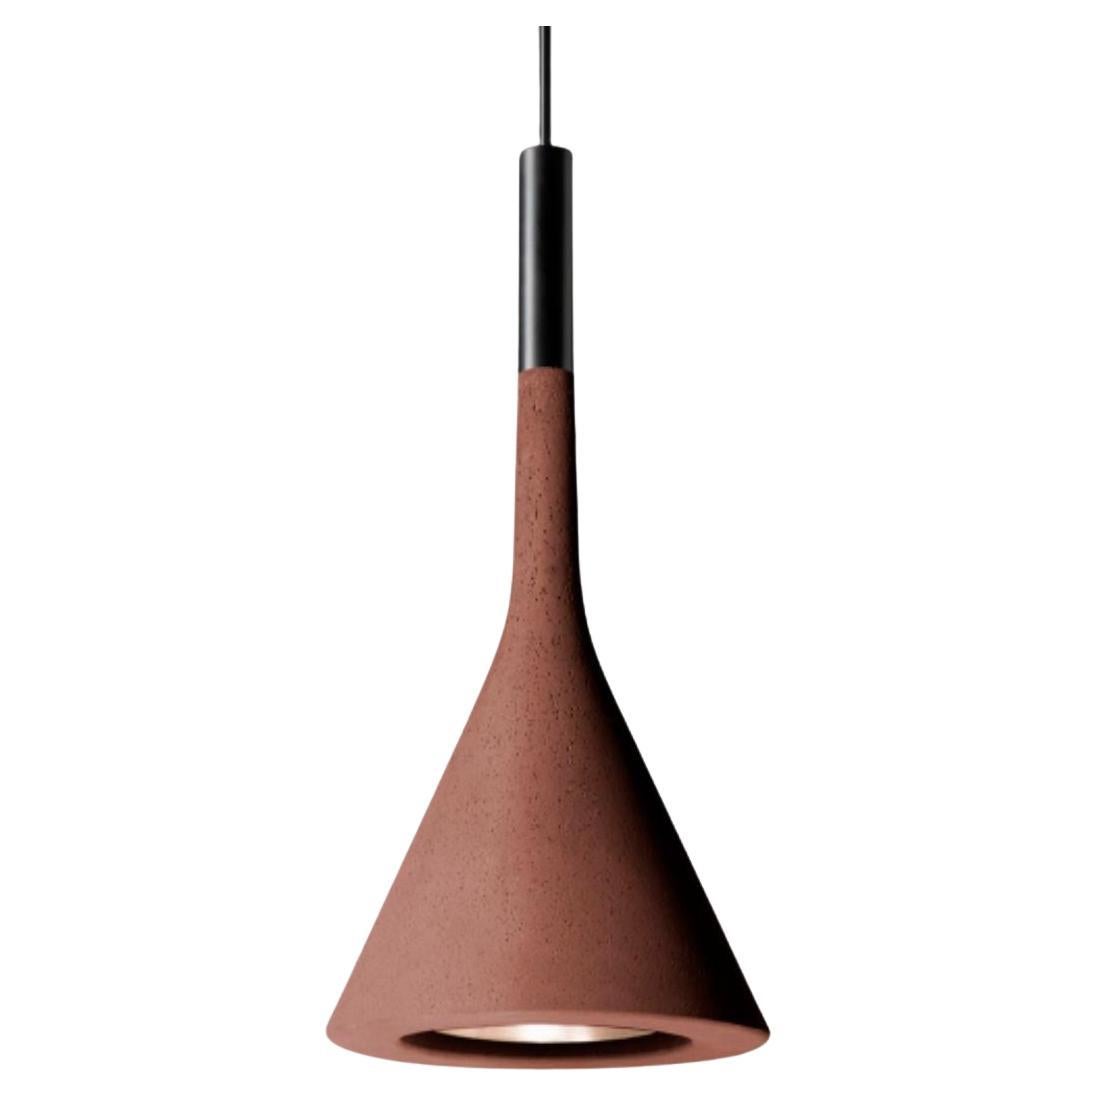 Lucidi & Pevere ‘Aplomb’ Concrete Pendant Lamp in Brick Red for Foscarini For Sale